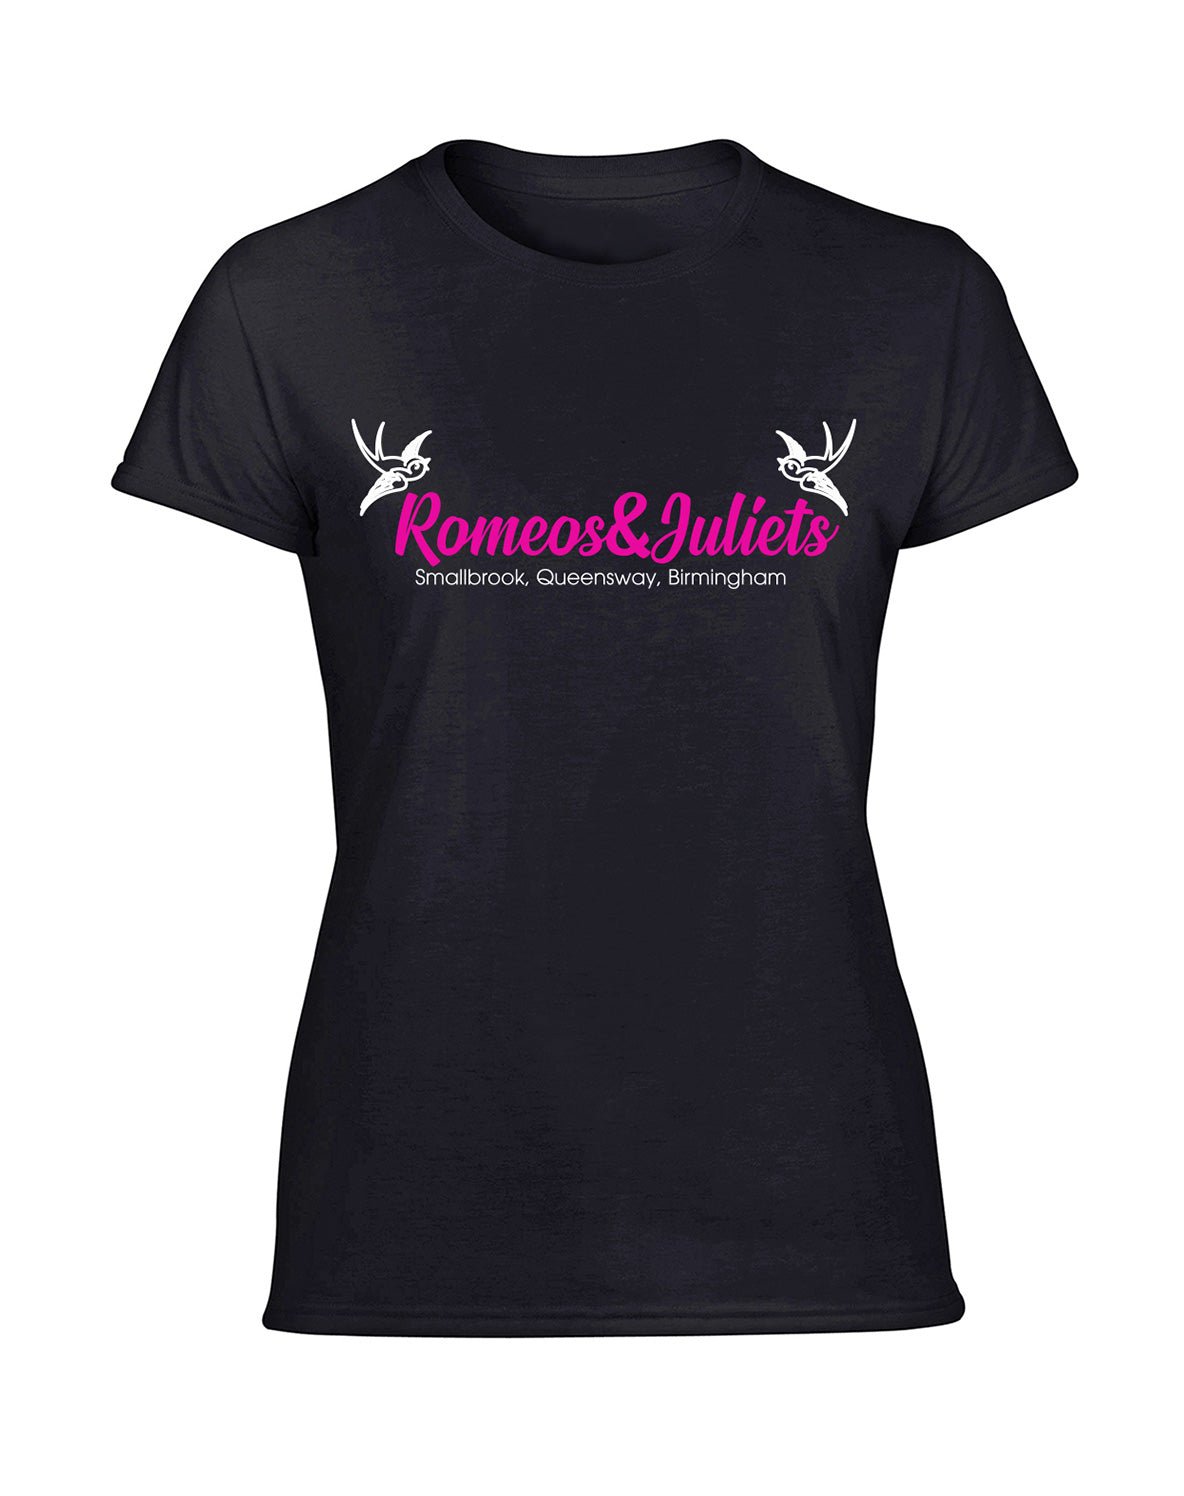 Romeo & Juliets - Birmingham - ladies fit T-shirt - various colours - Dirty Stop Outs